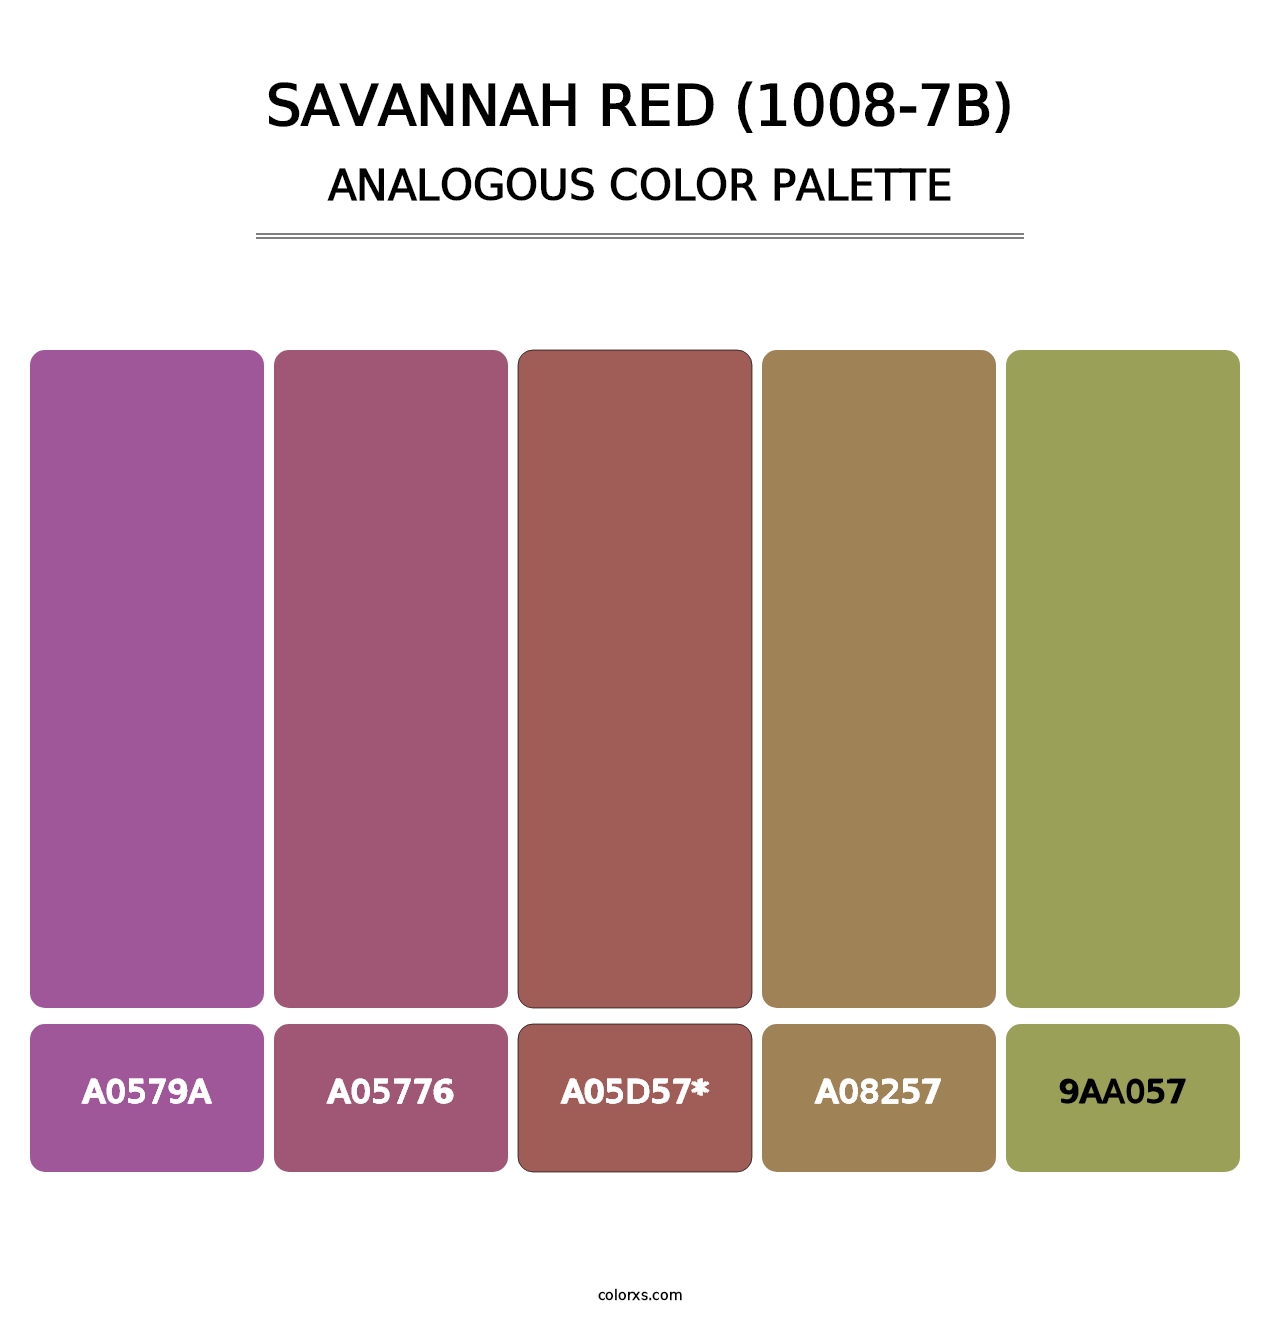 Savannah Red (1008-7B) - Analogous Color Palette